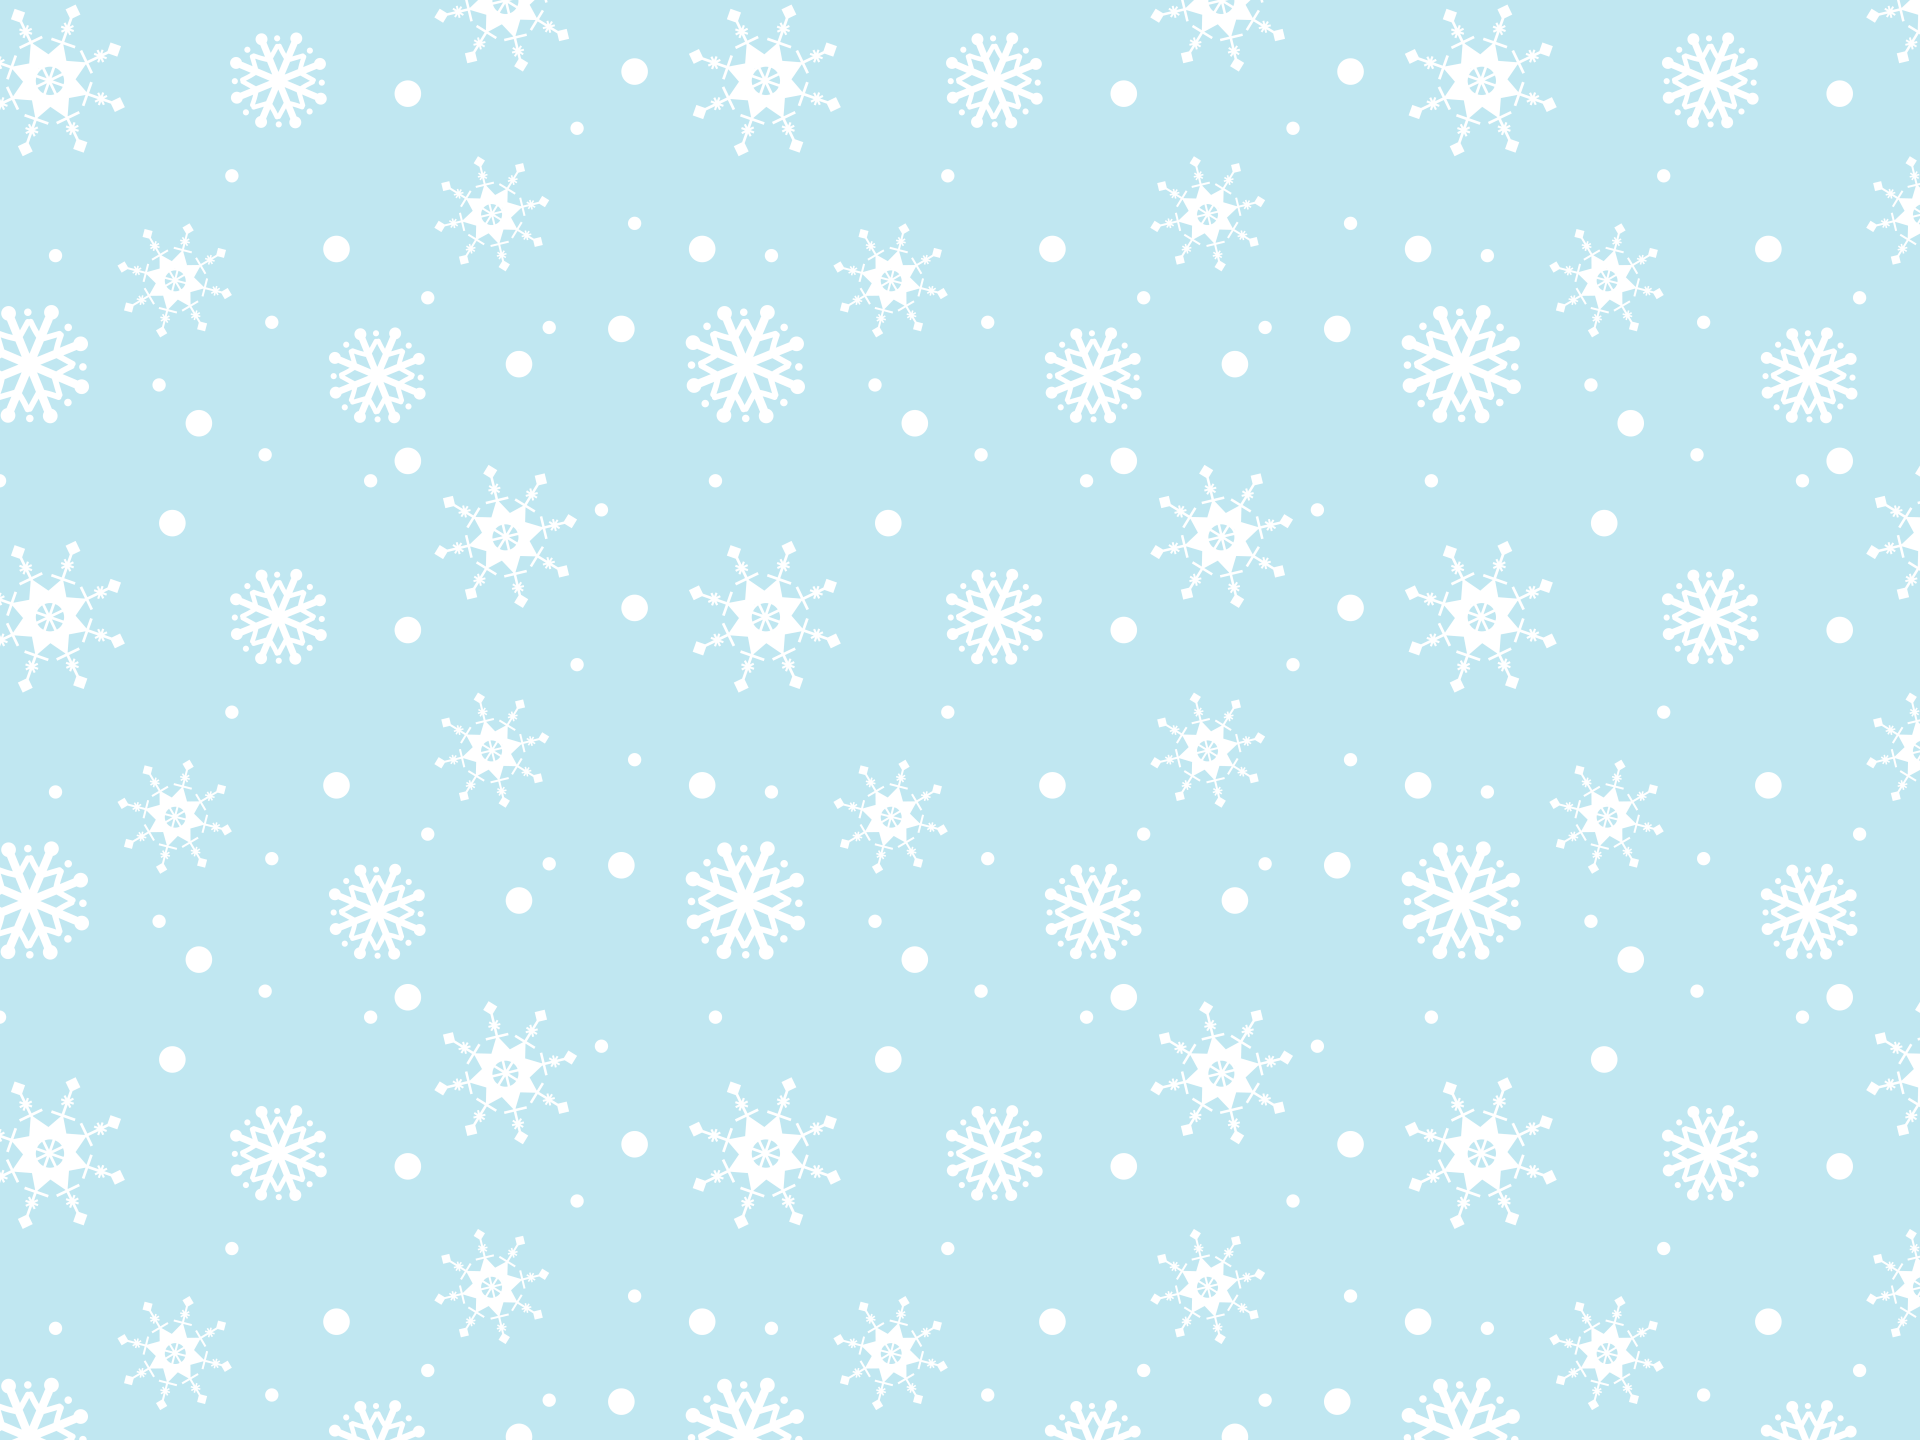 Various snowflakes illustration on blue background